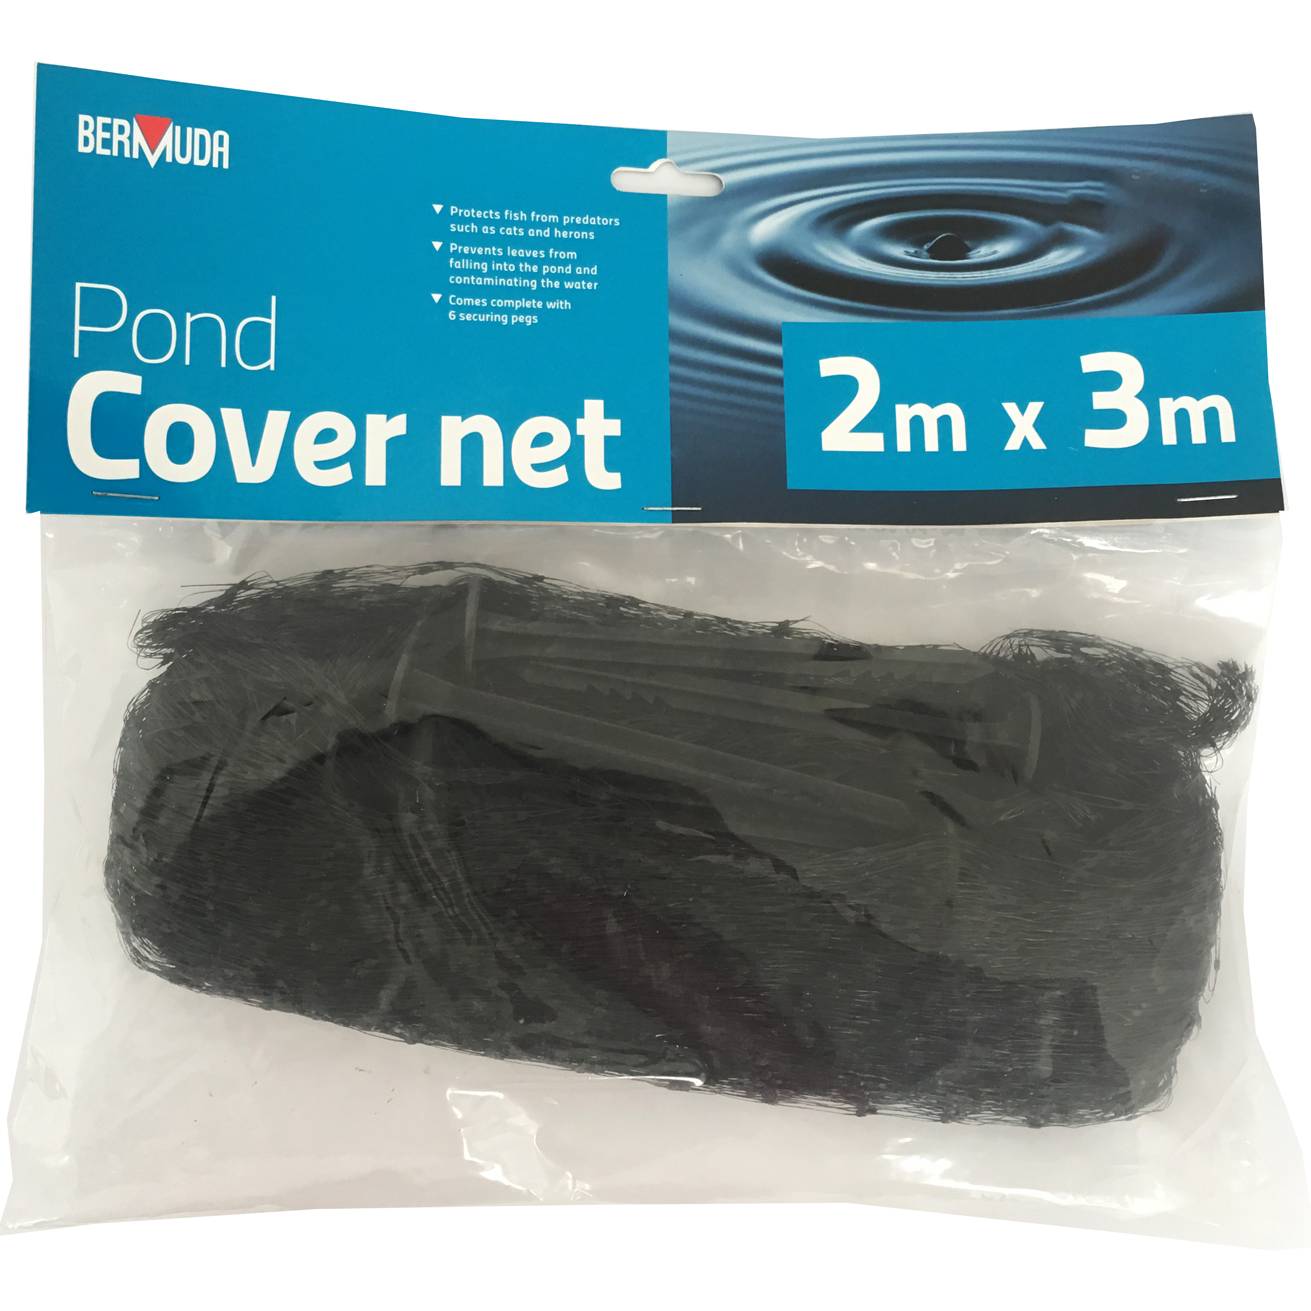 Bermuda Pond Cover Net - 2m x 3m